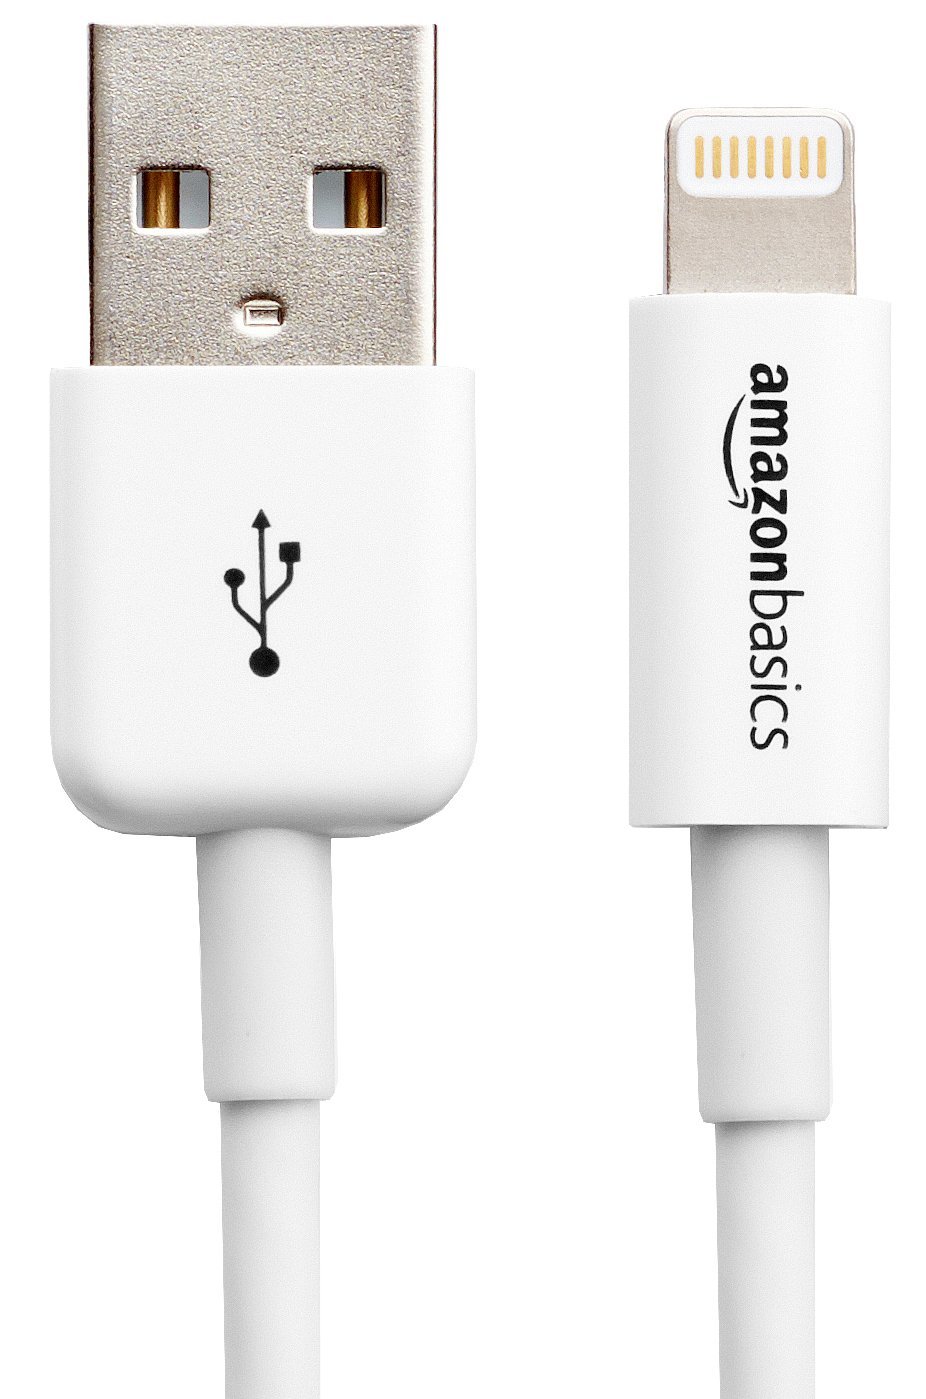 AmazonBasics 6 Feet Lightning to USB Cable – Just $7.99!